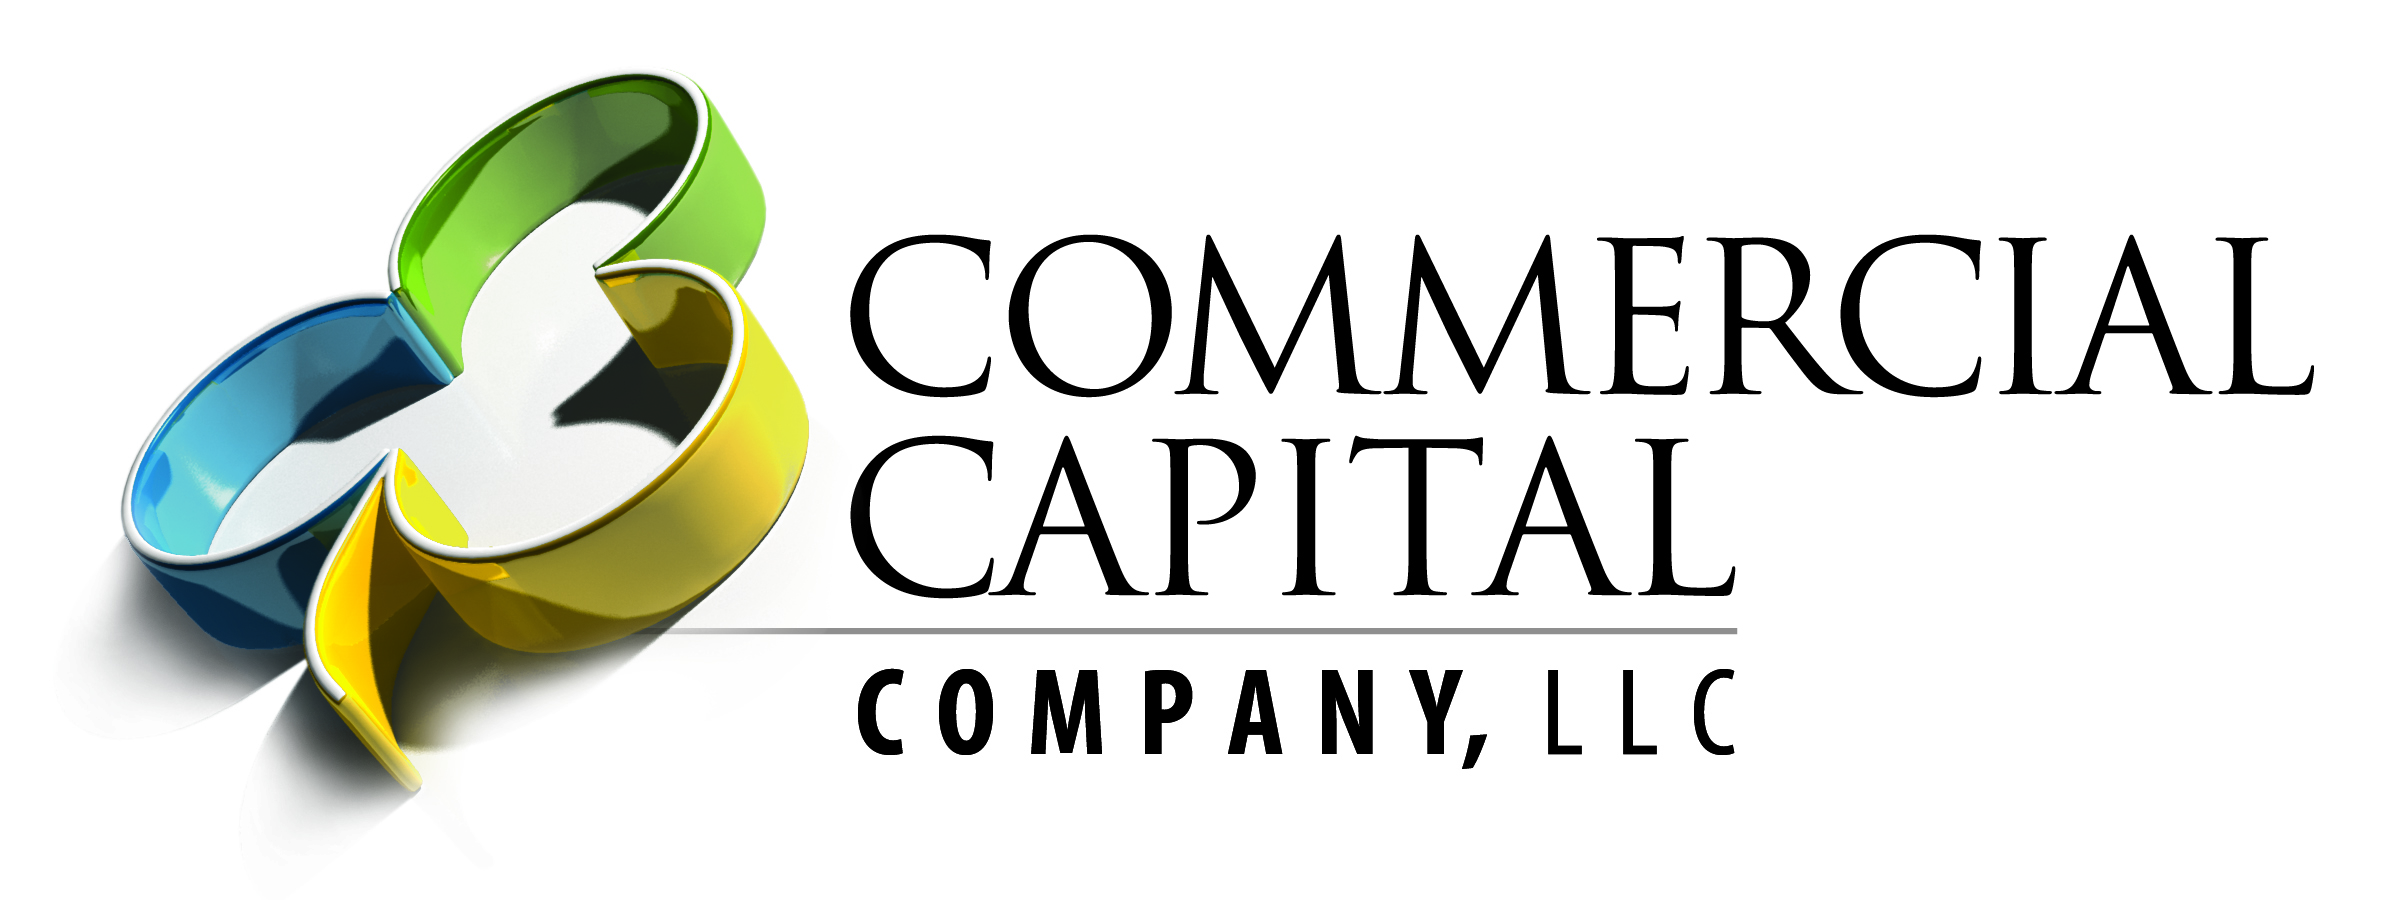 Commercial Capital Company, LLC